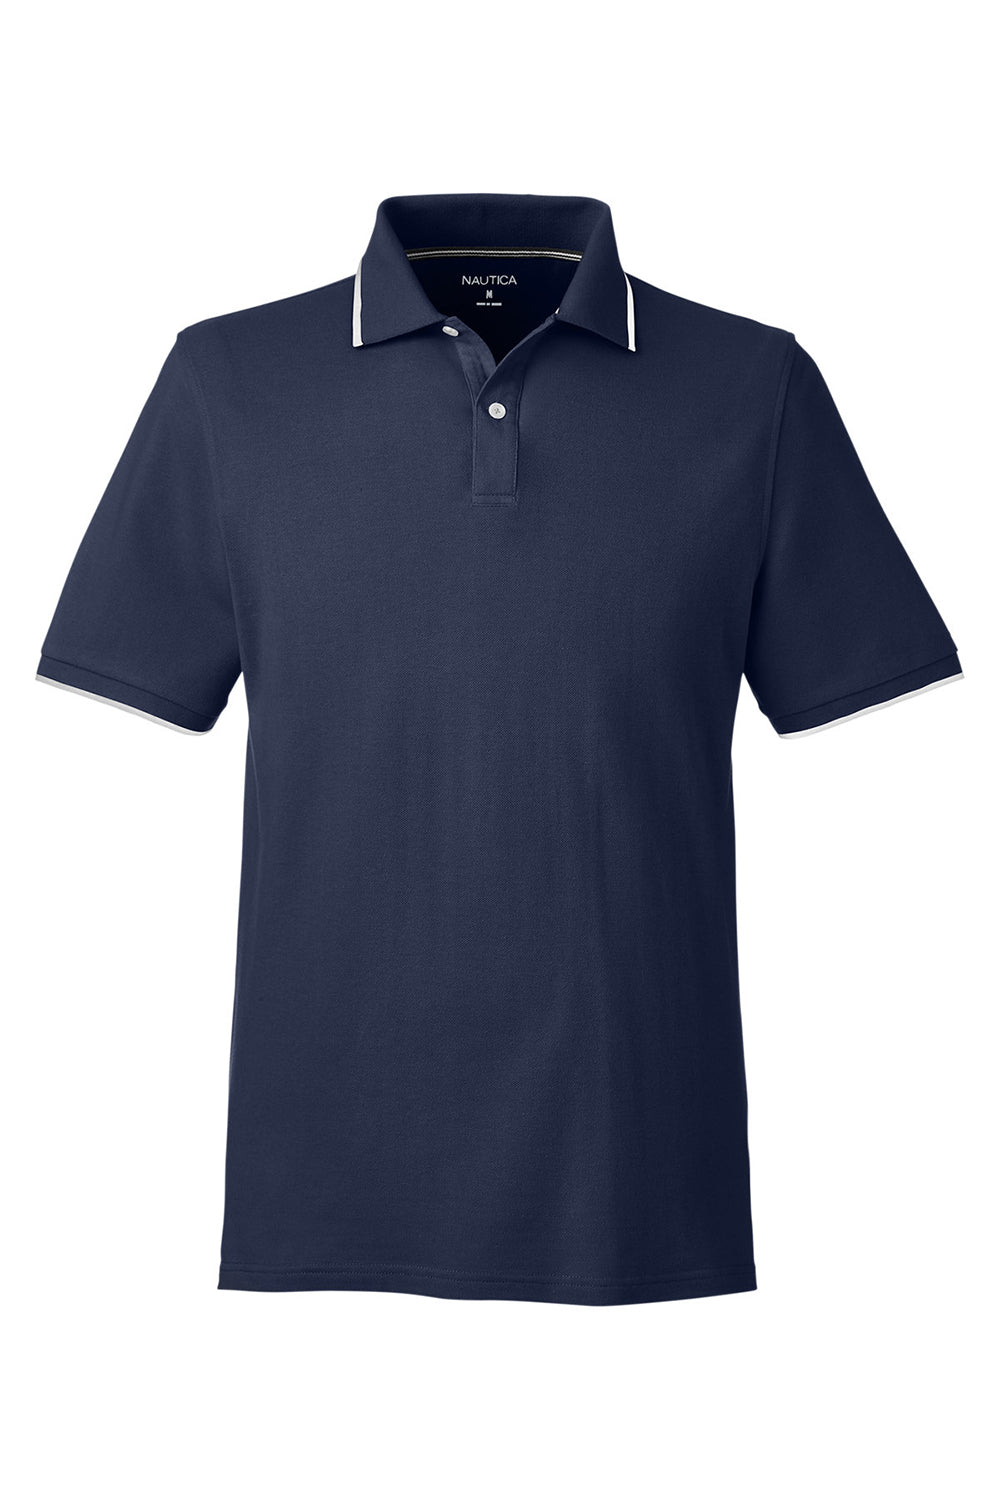 Nautica N17165 Mens Desk Short Sleeve Polo Shirt Navy Blue/White Flat Front